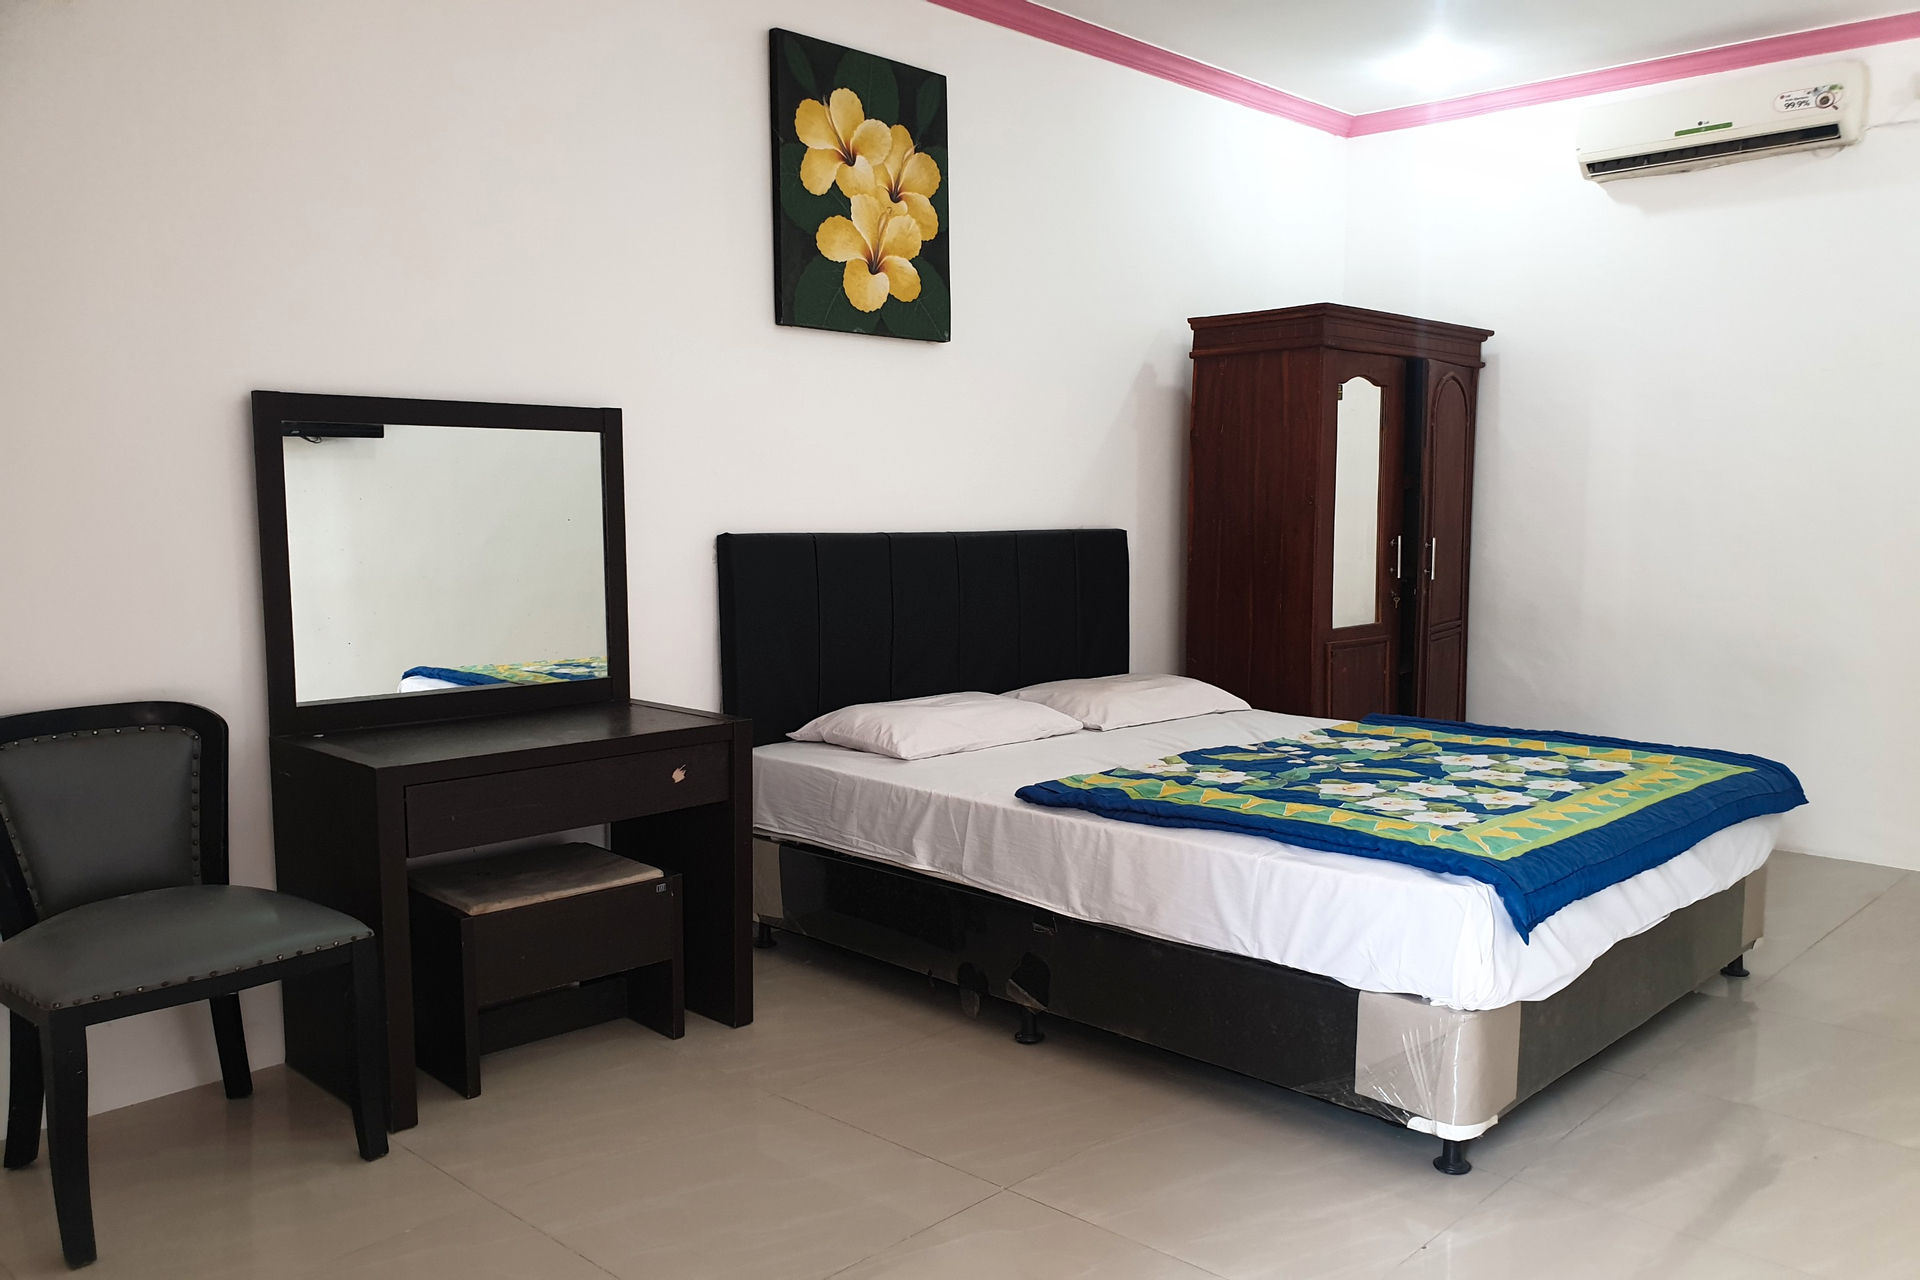 Bedroom 5, OYO 90822 Hotel Taman Wisata (tutup sementara), Denpasar